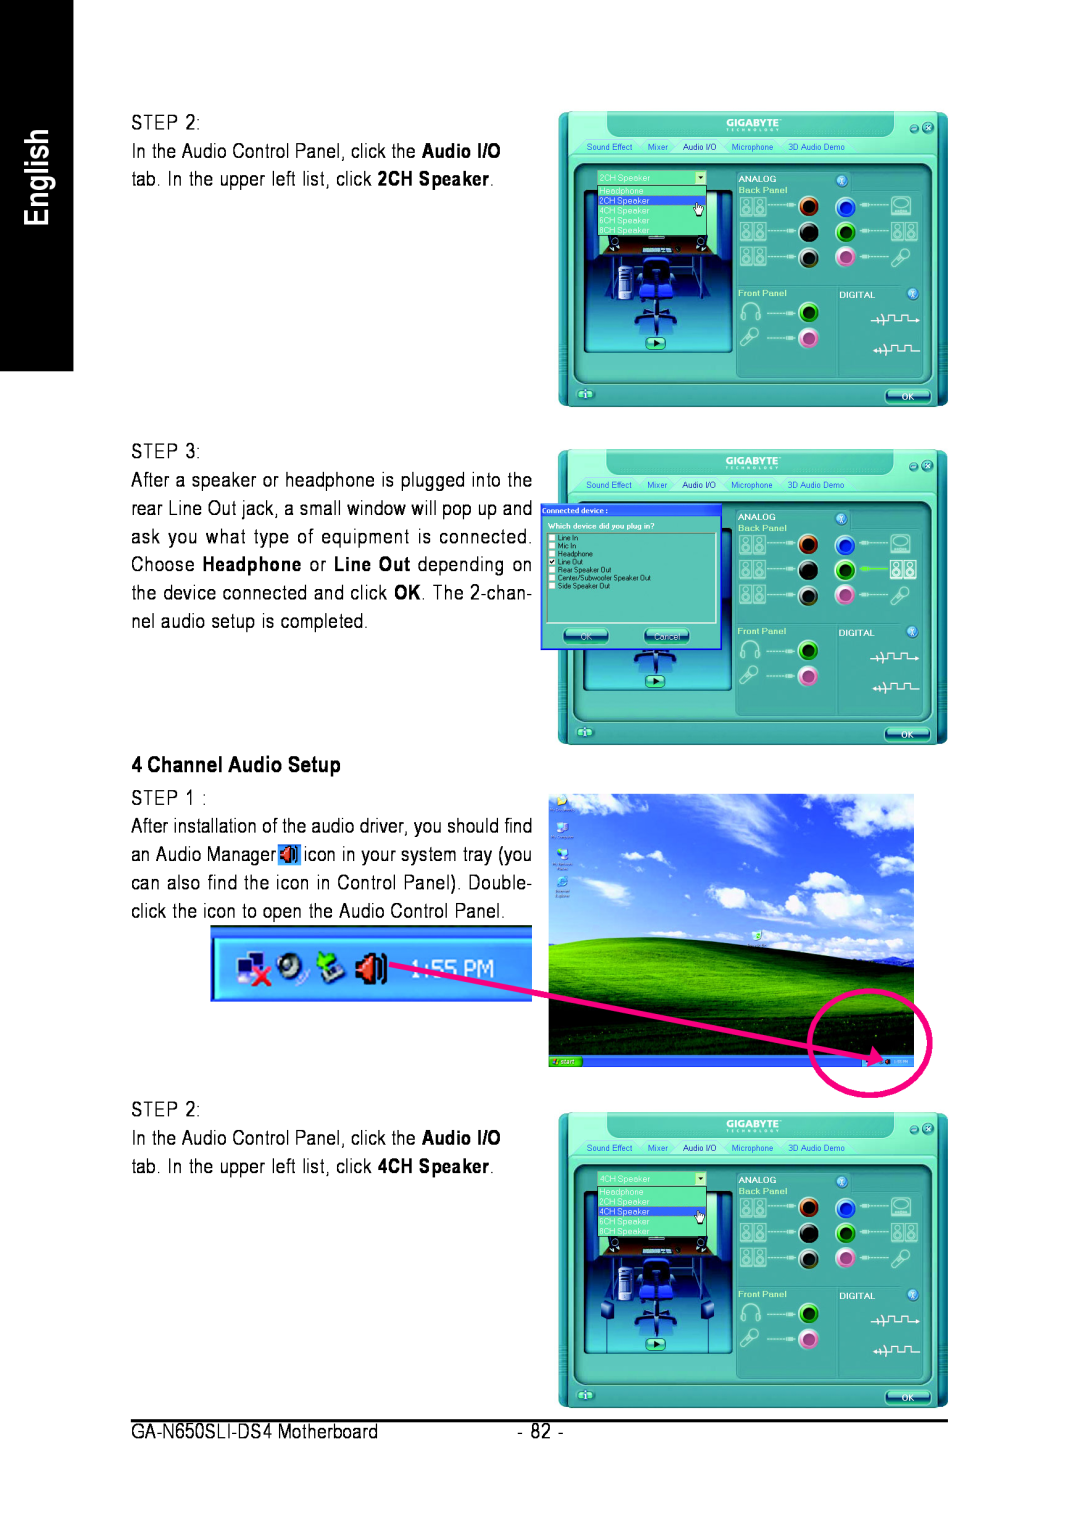 Intel GA-N650SLI-DS4 user manual English, Channel Audio Setup 